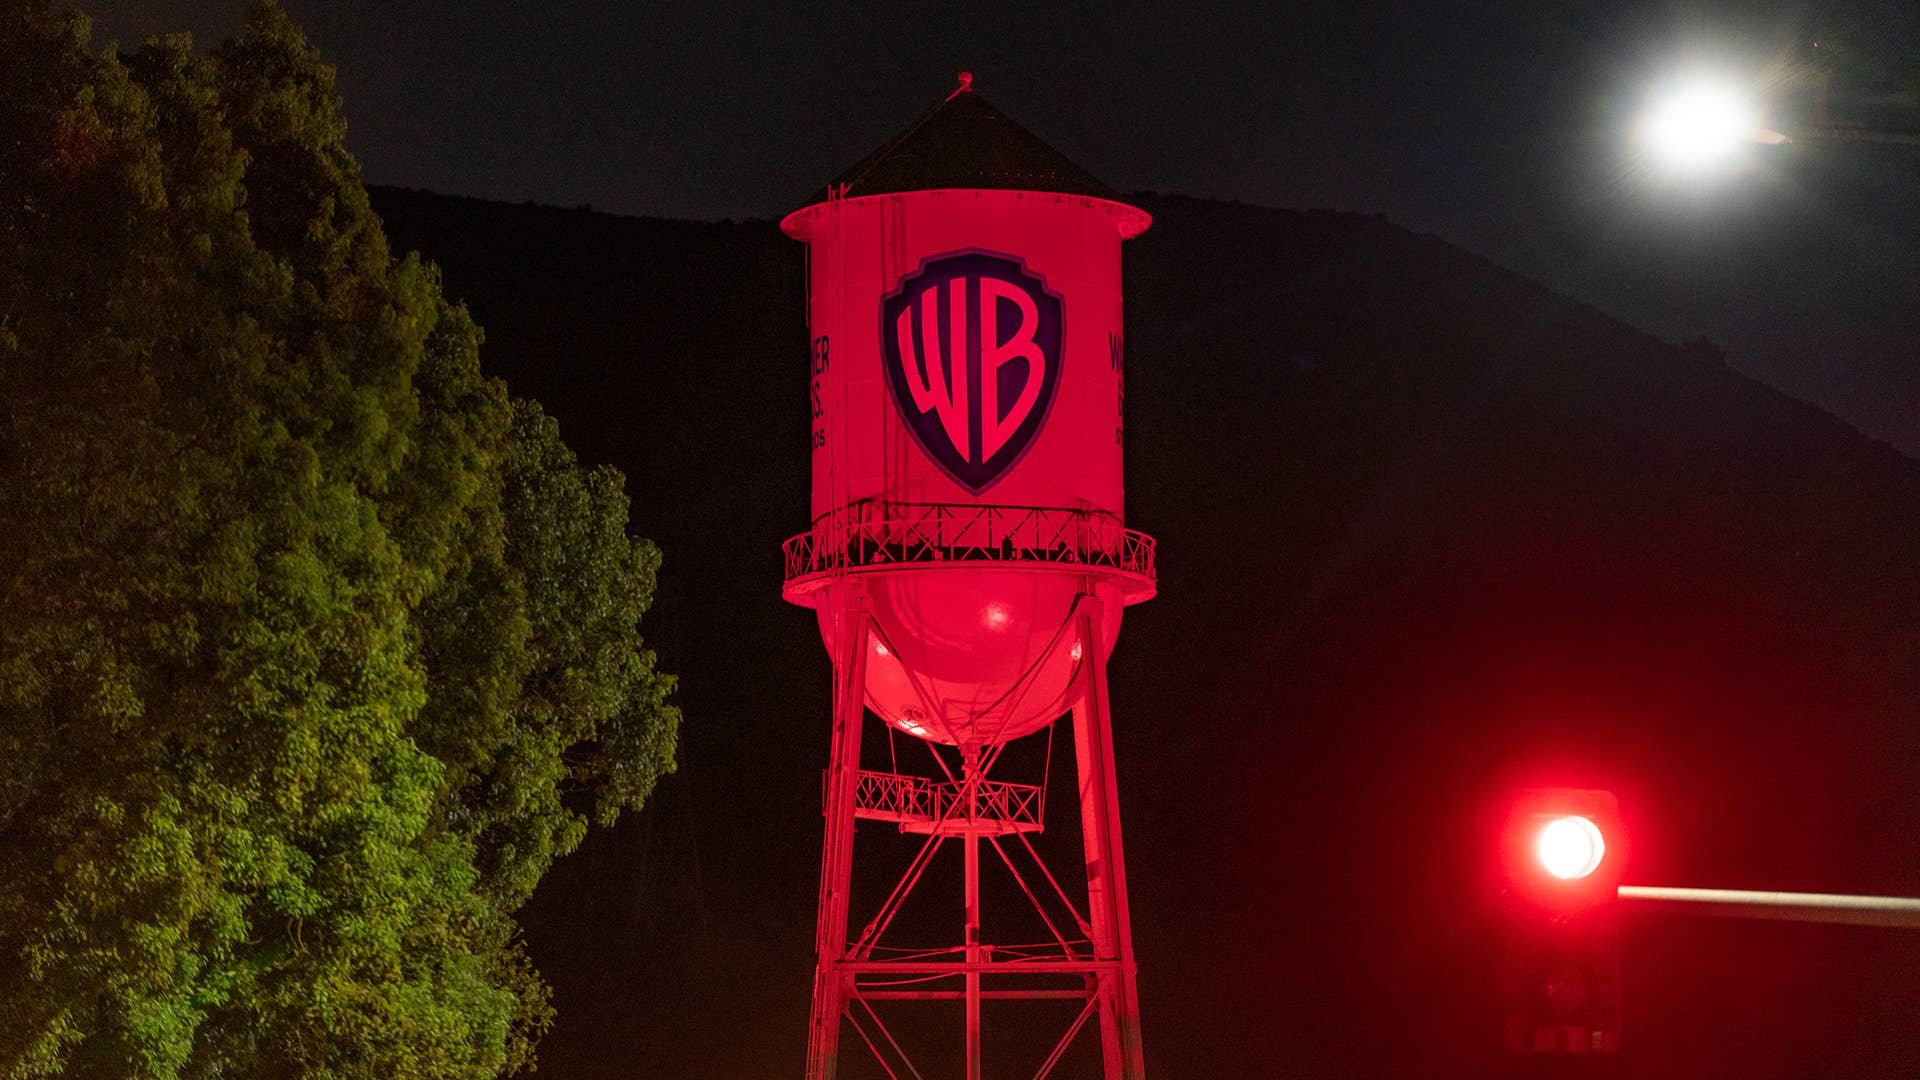 Warner Bros.